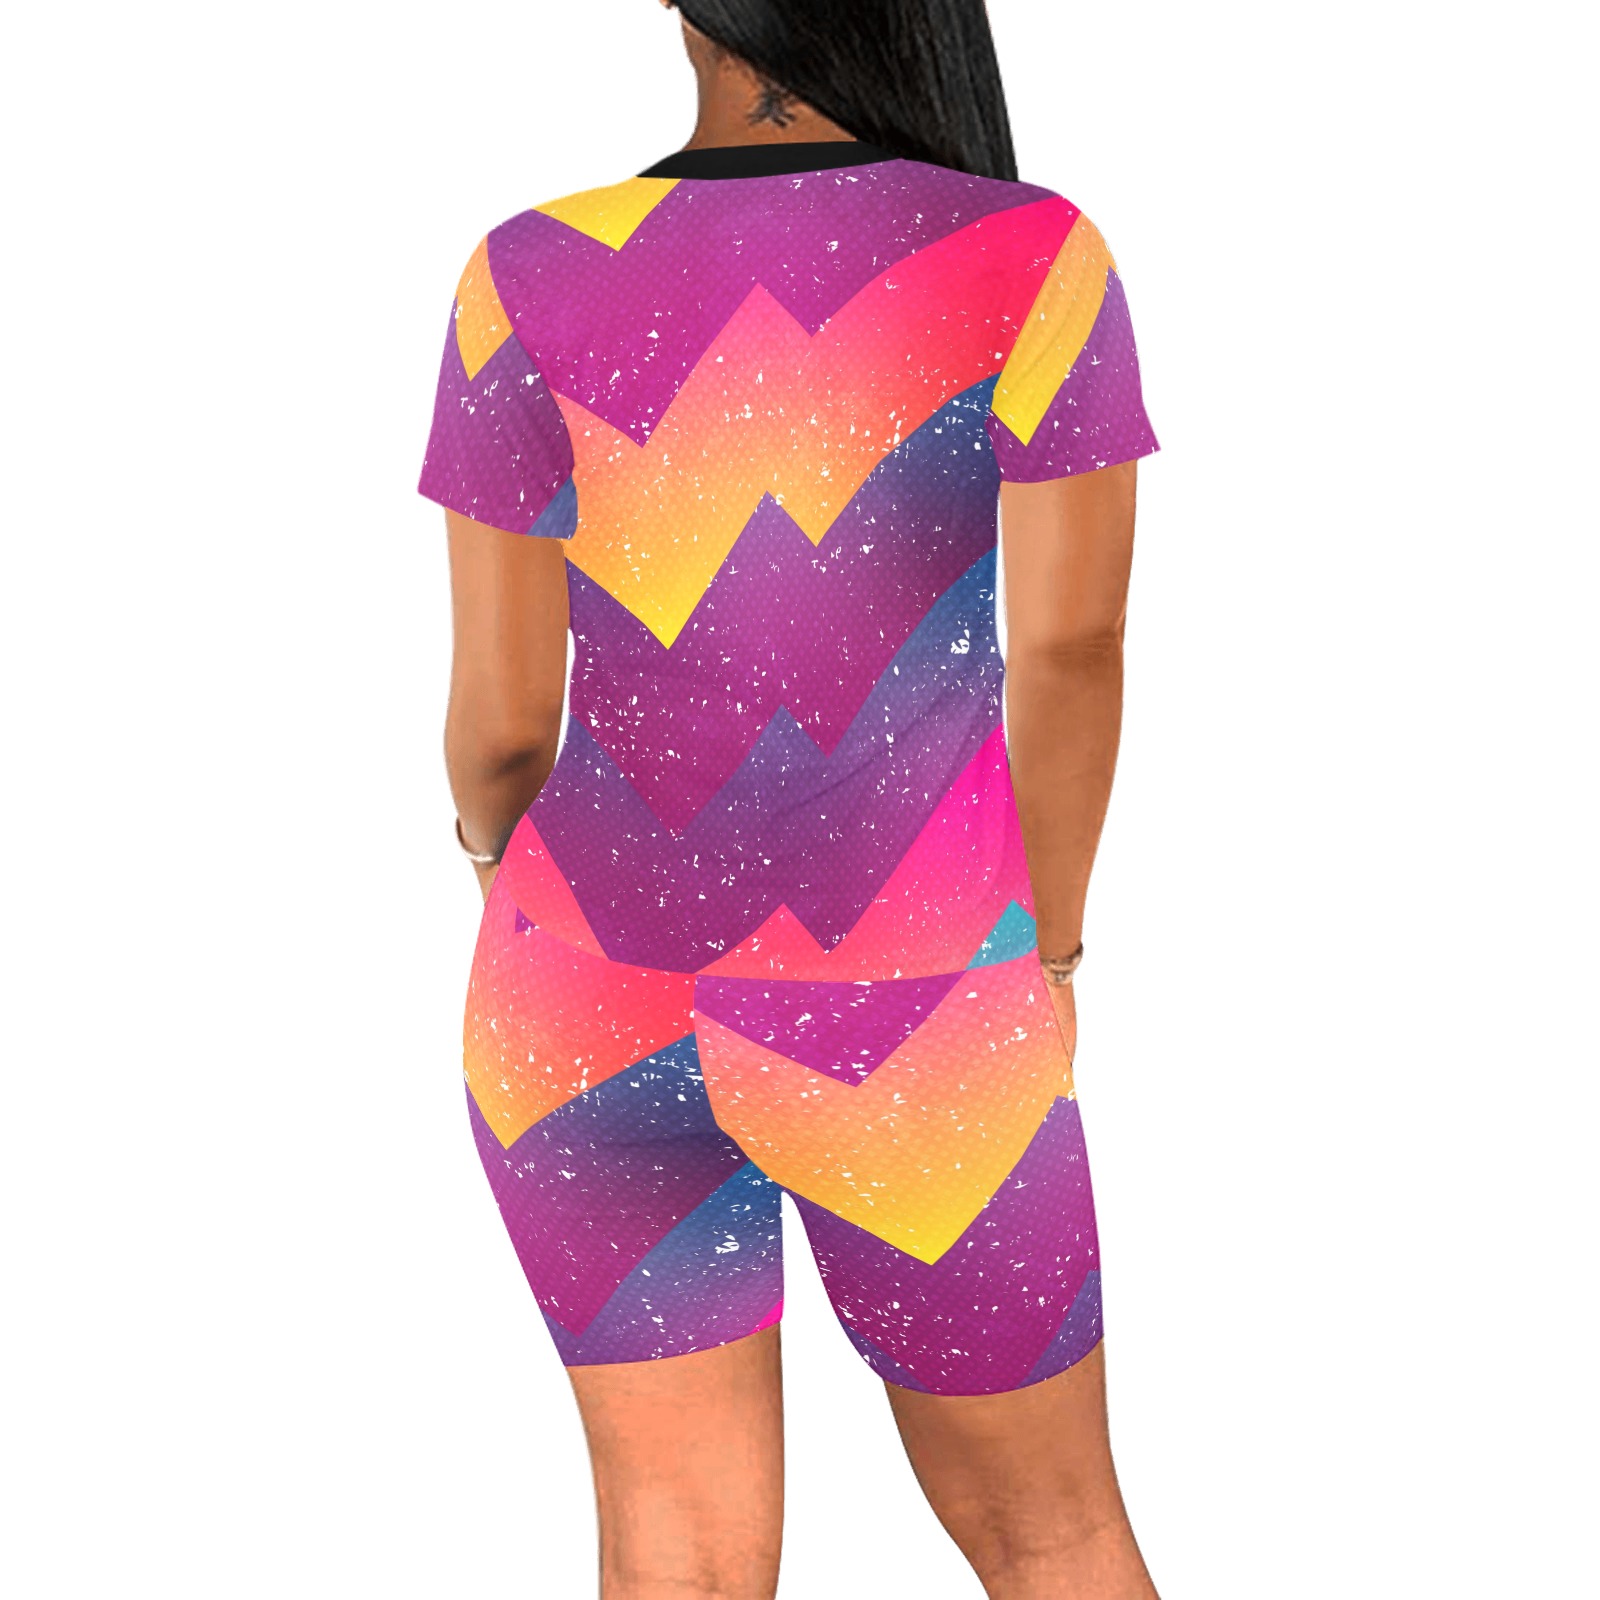 bright geometric seamless pattern with grunge effect_298851920.jpg Women's Short Yoga Set